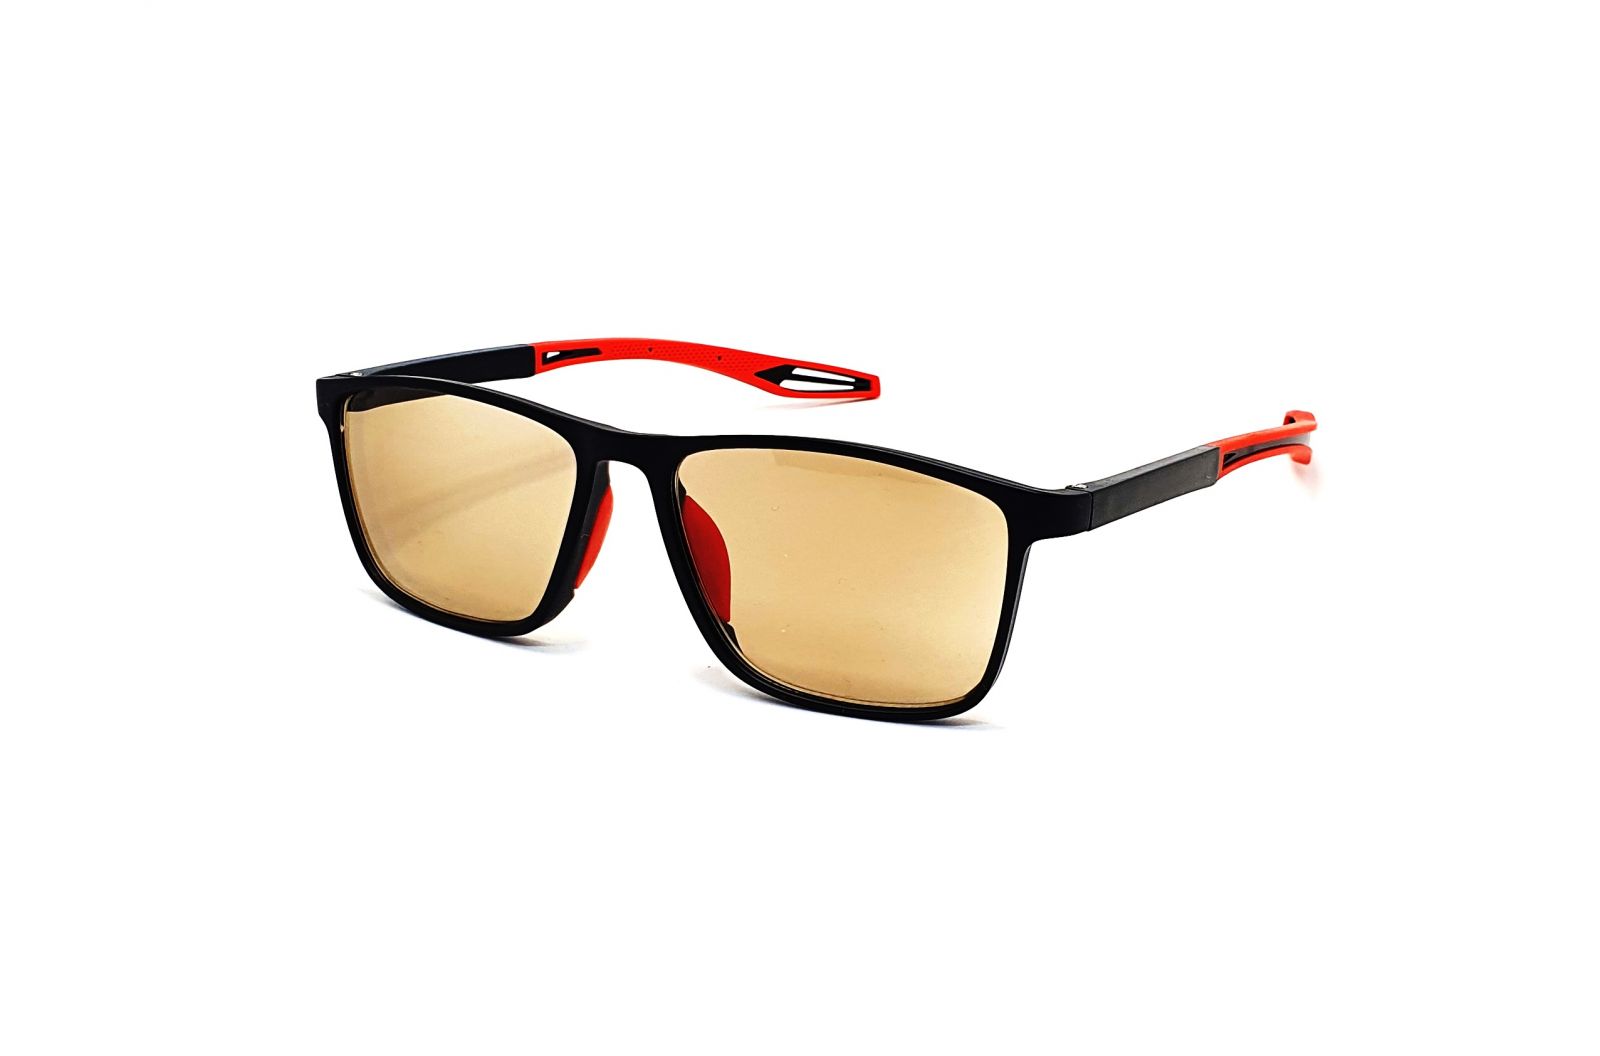 Samozabarvovací dioptrické brýle F04B / -3,50 black/red clear-brown